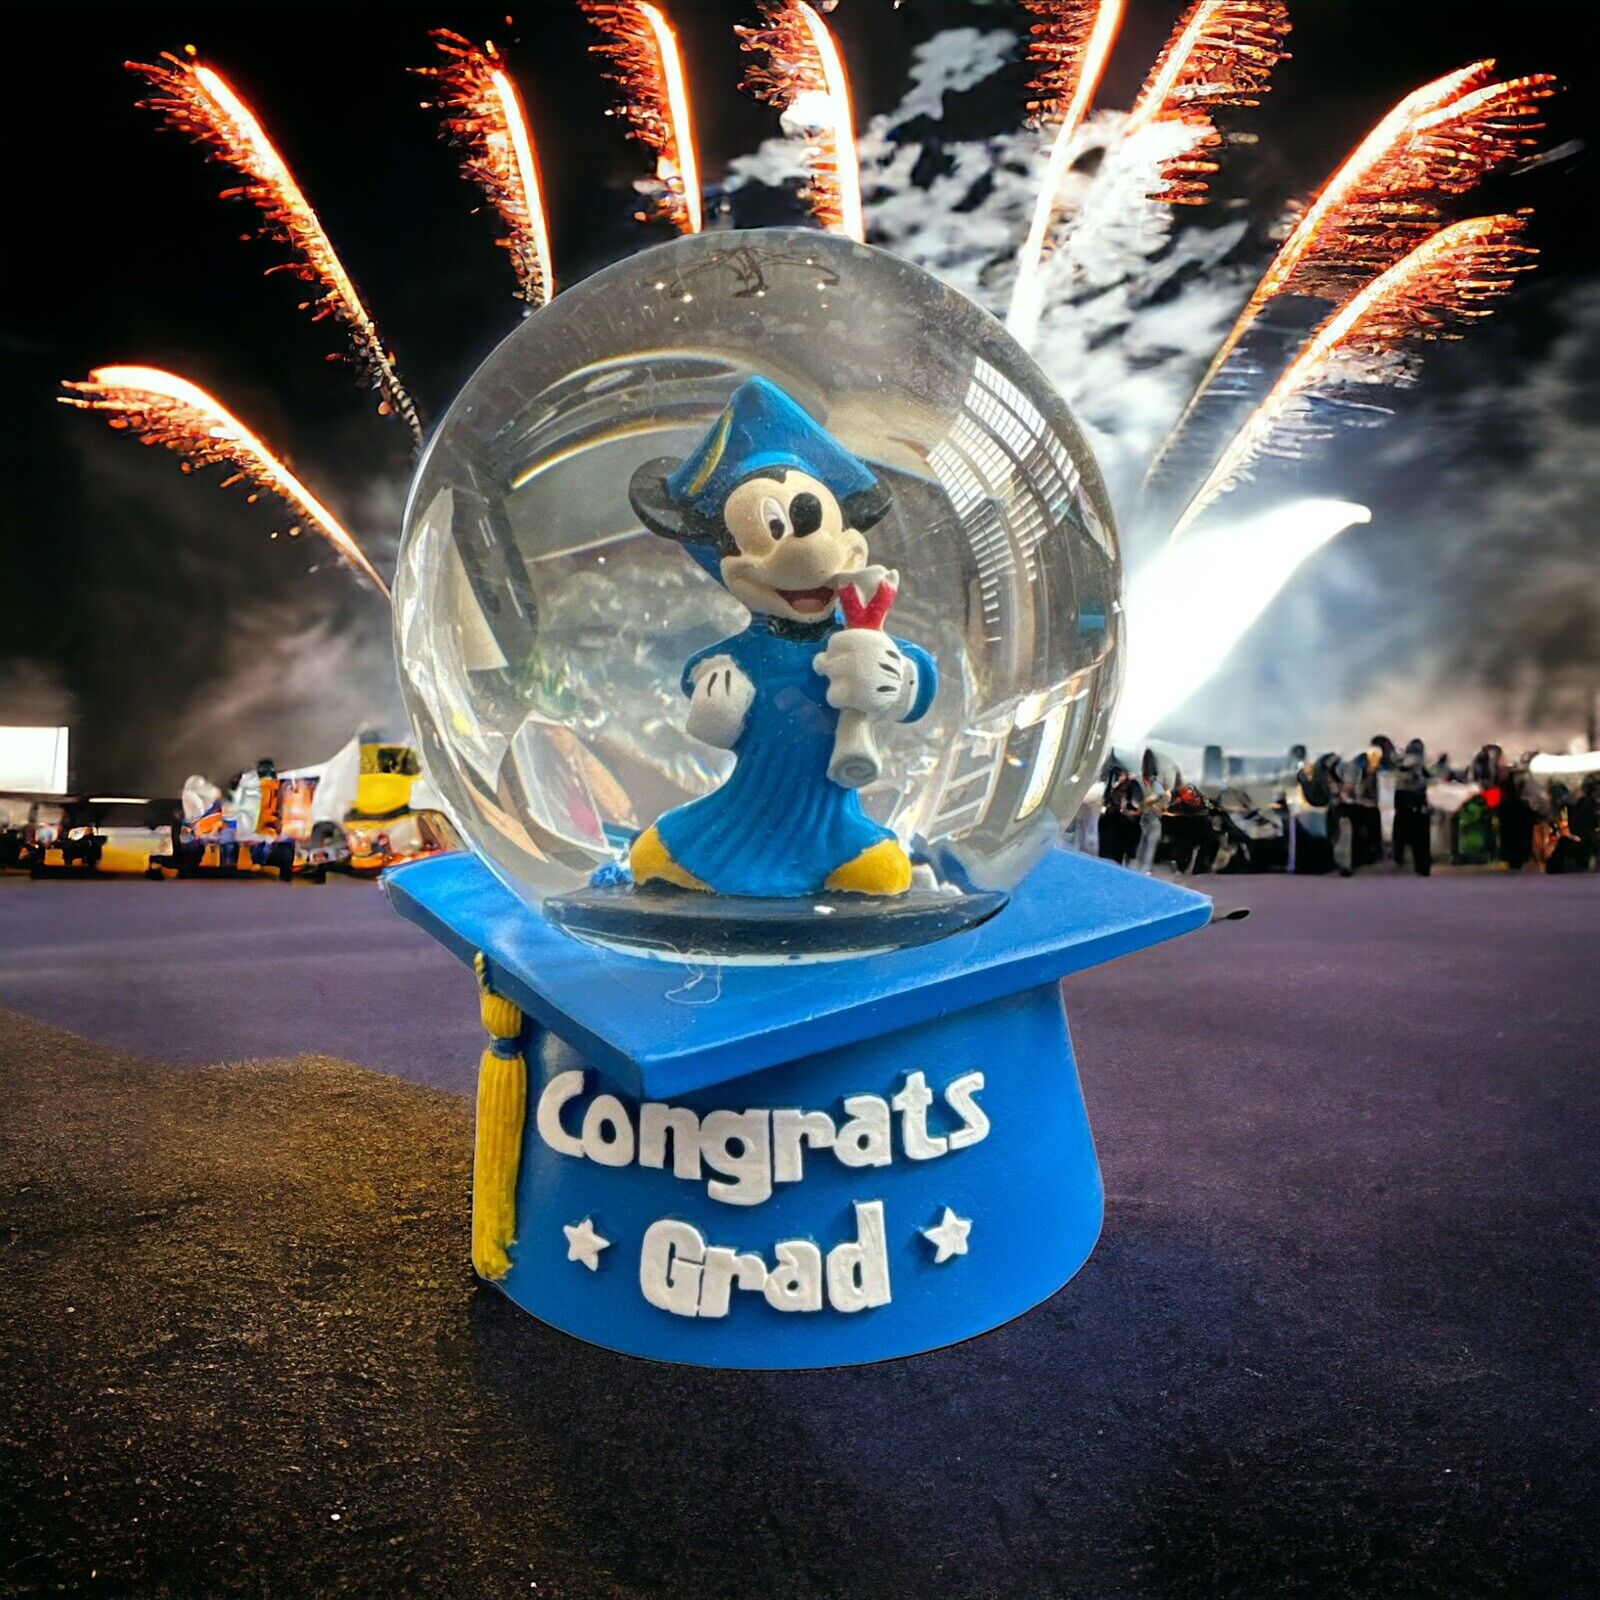 Disney Mickey Mouse Congrats Grad Musical Snow globe Plays “Pomp & Circumstance”